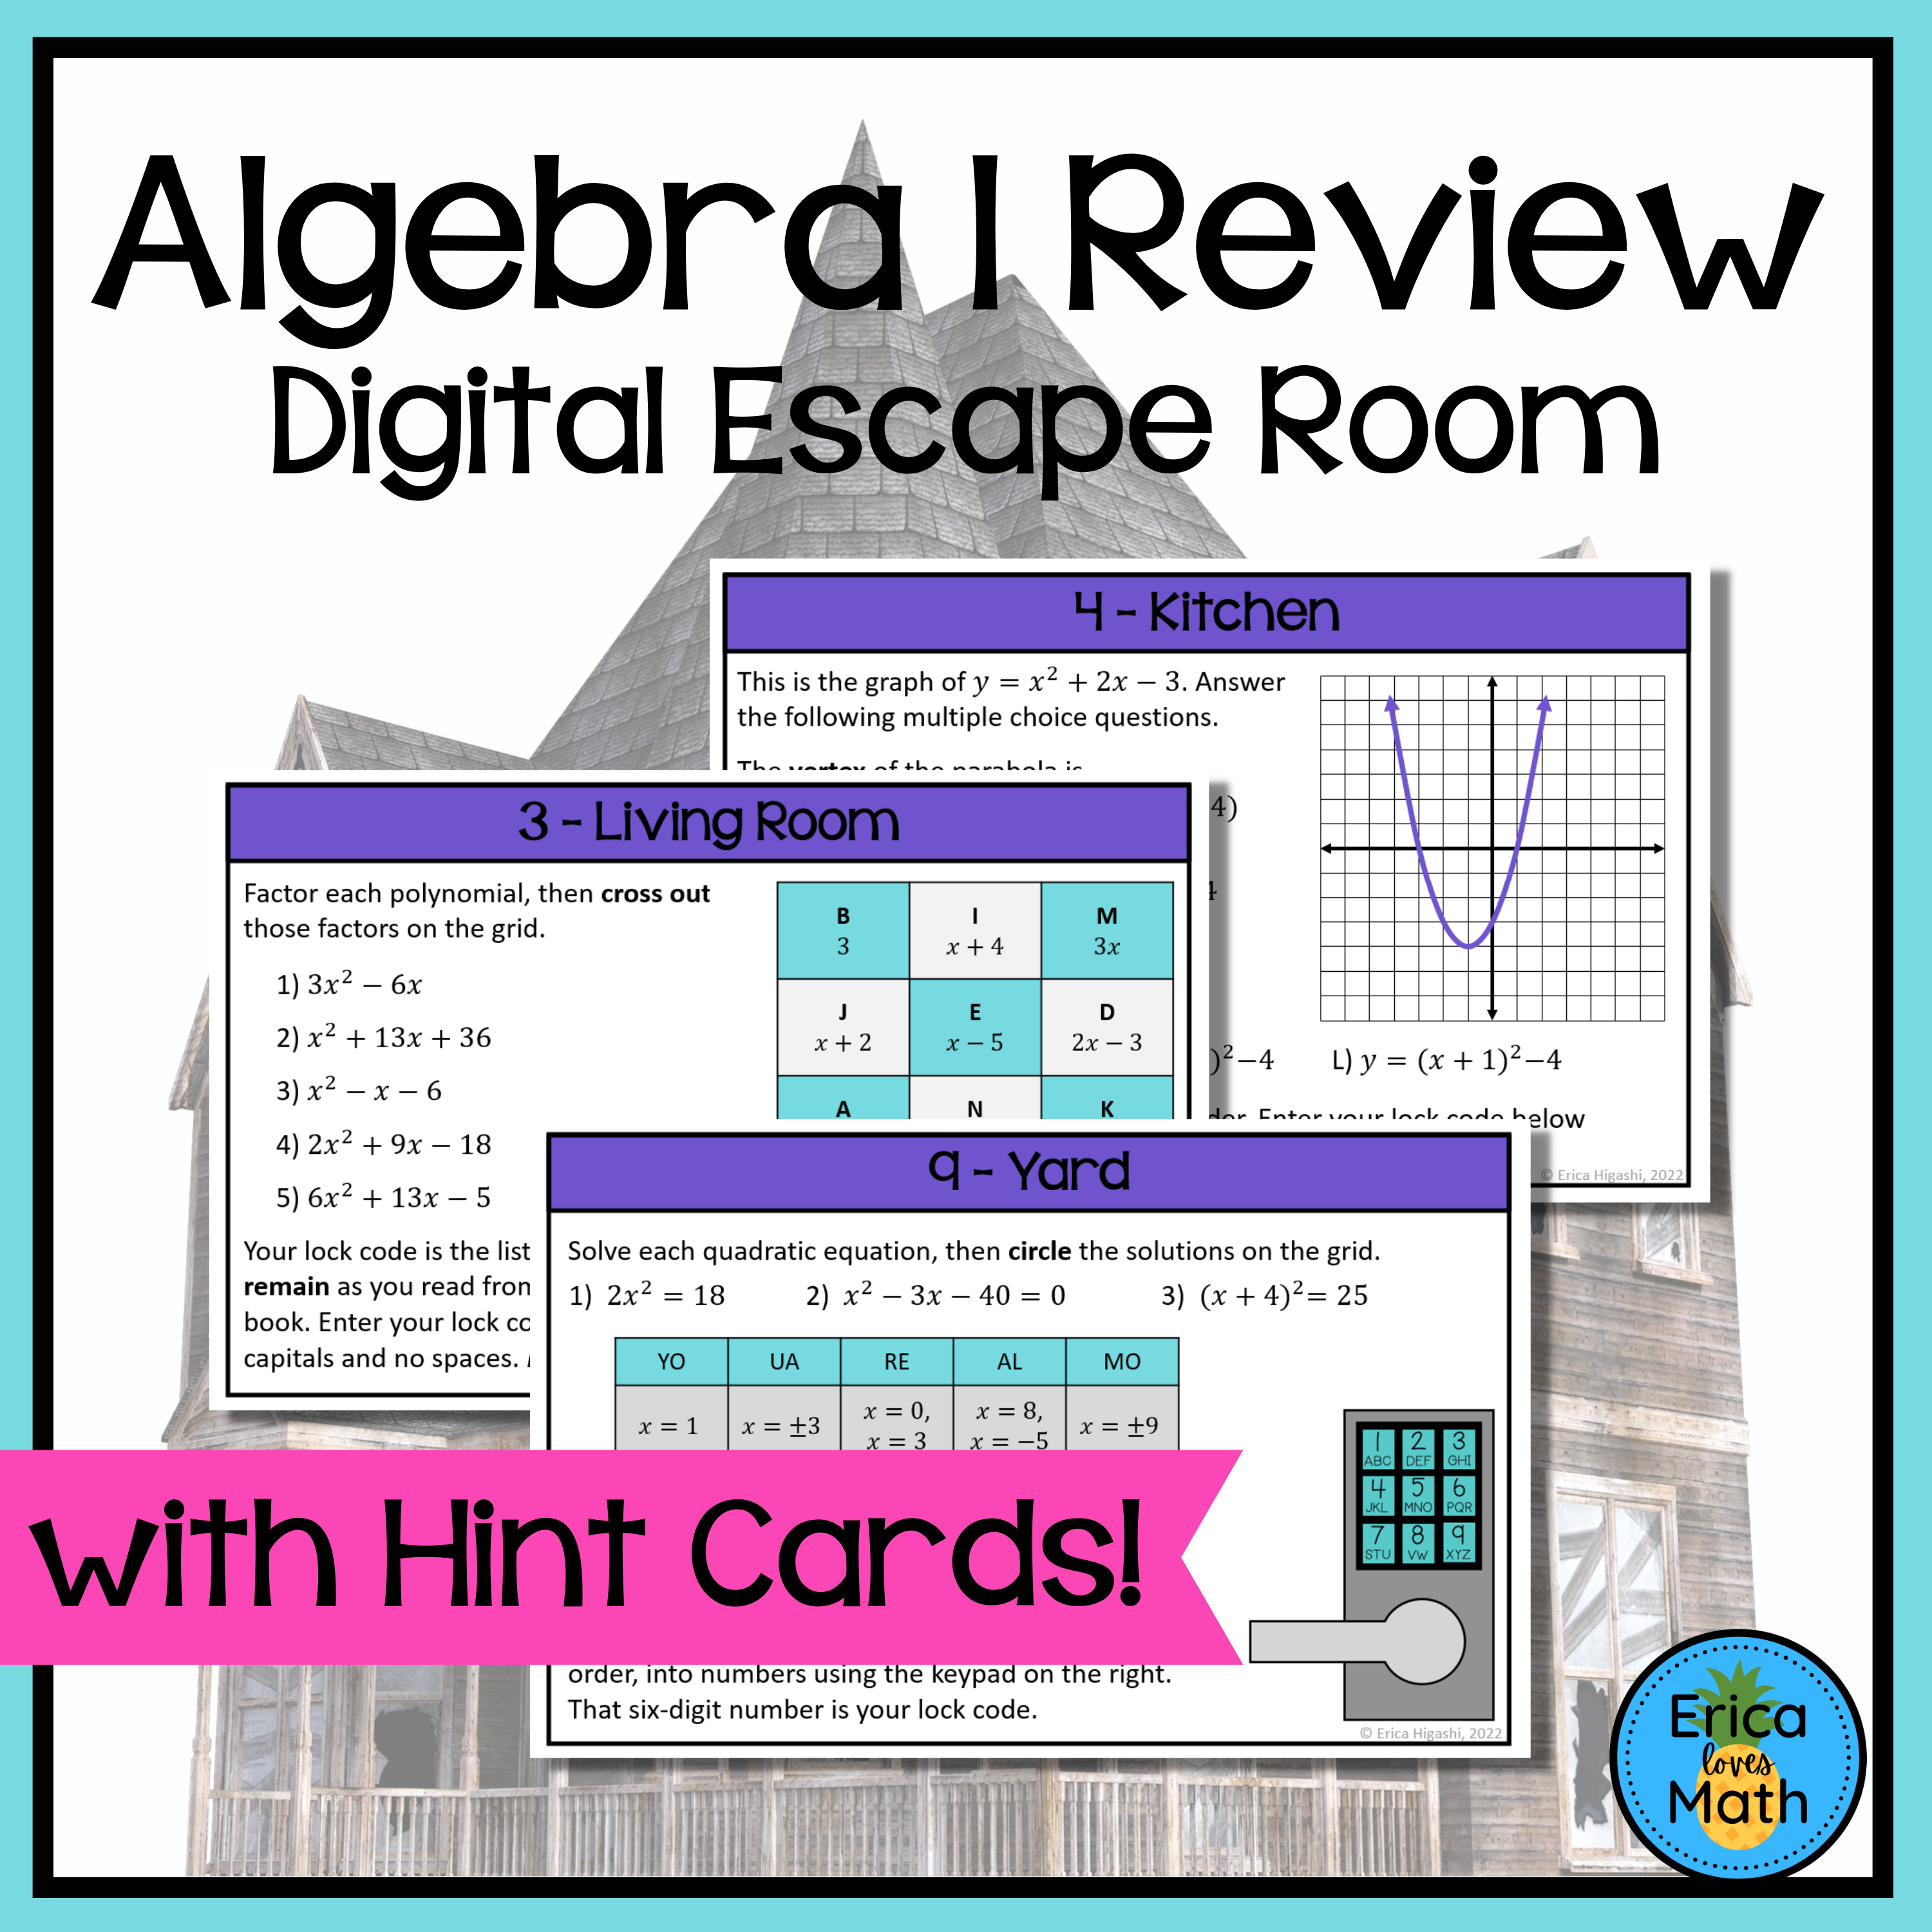 Algebra 1 Review Digital Escape Room Activity